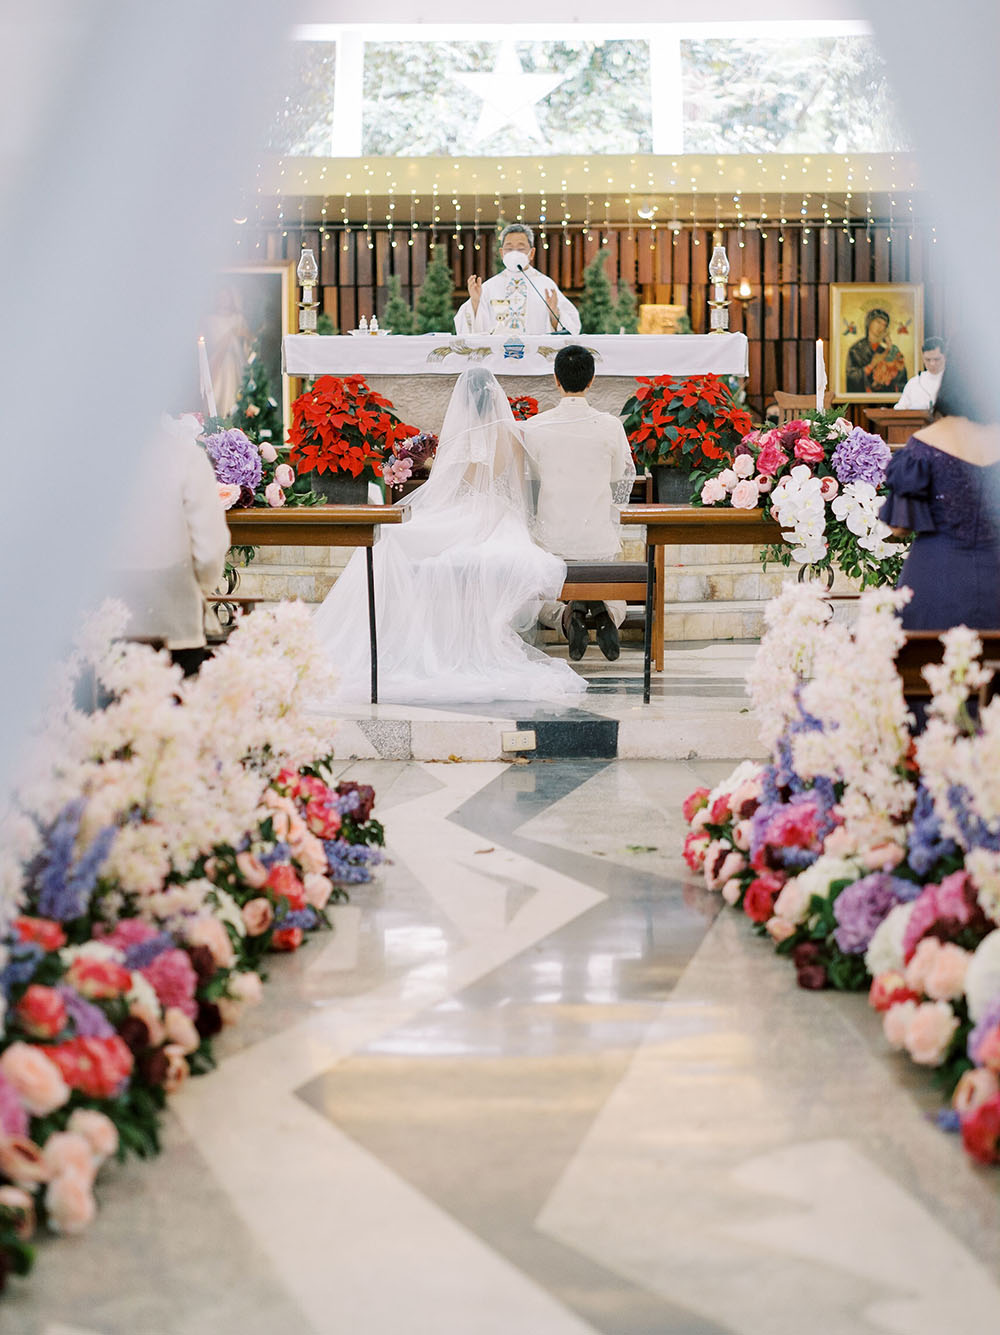 Lush Philippines mariage lilas prune fleurs